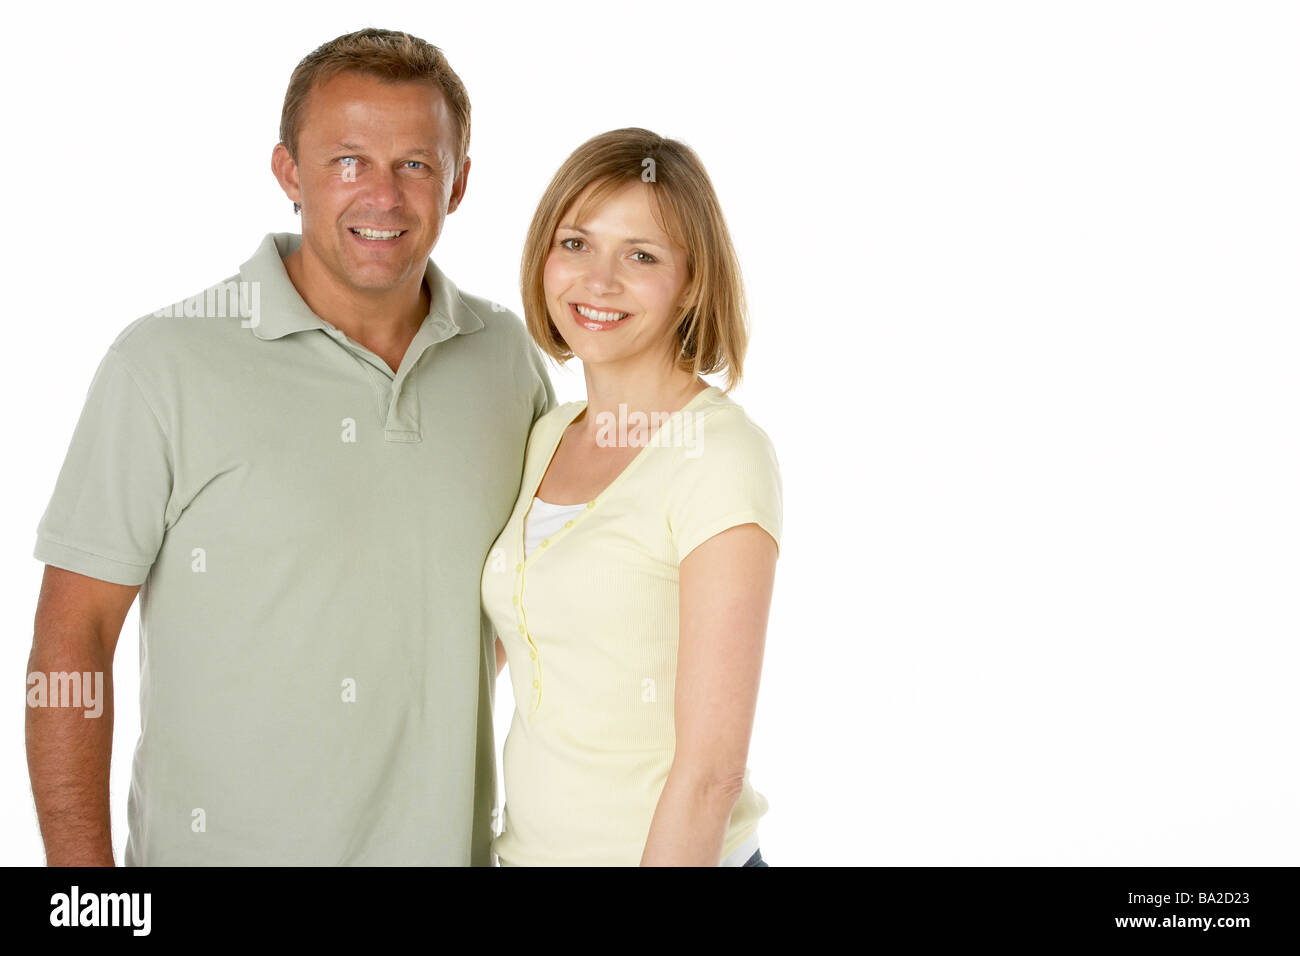 Женщина супруг или супруга. Фотопортрет муж и жена. Муж и жена фото на белом фоне. Счастливые муж и жена белый фон. Фото муж жена горизонтально.